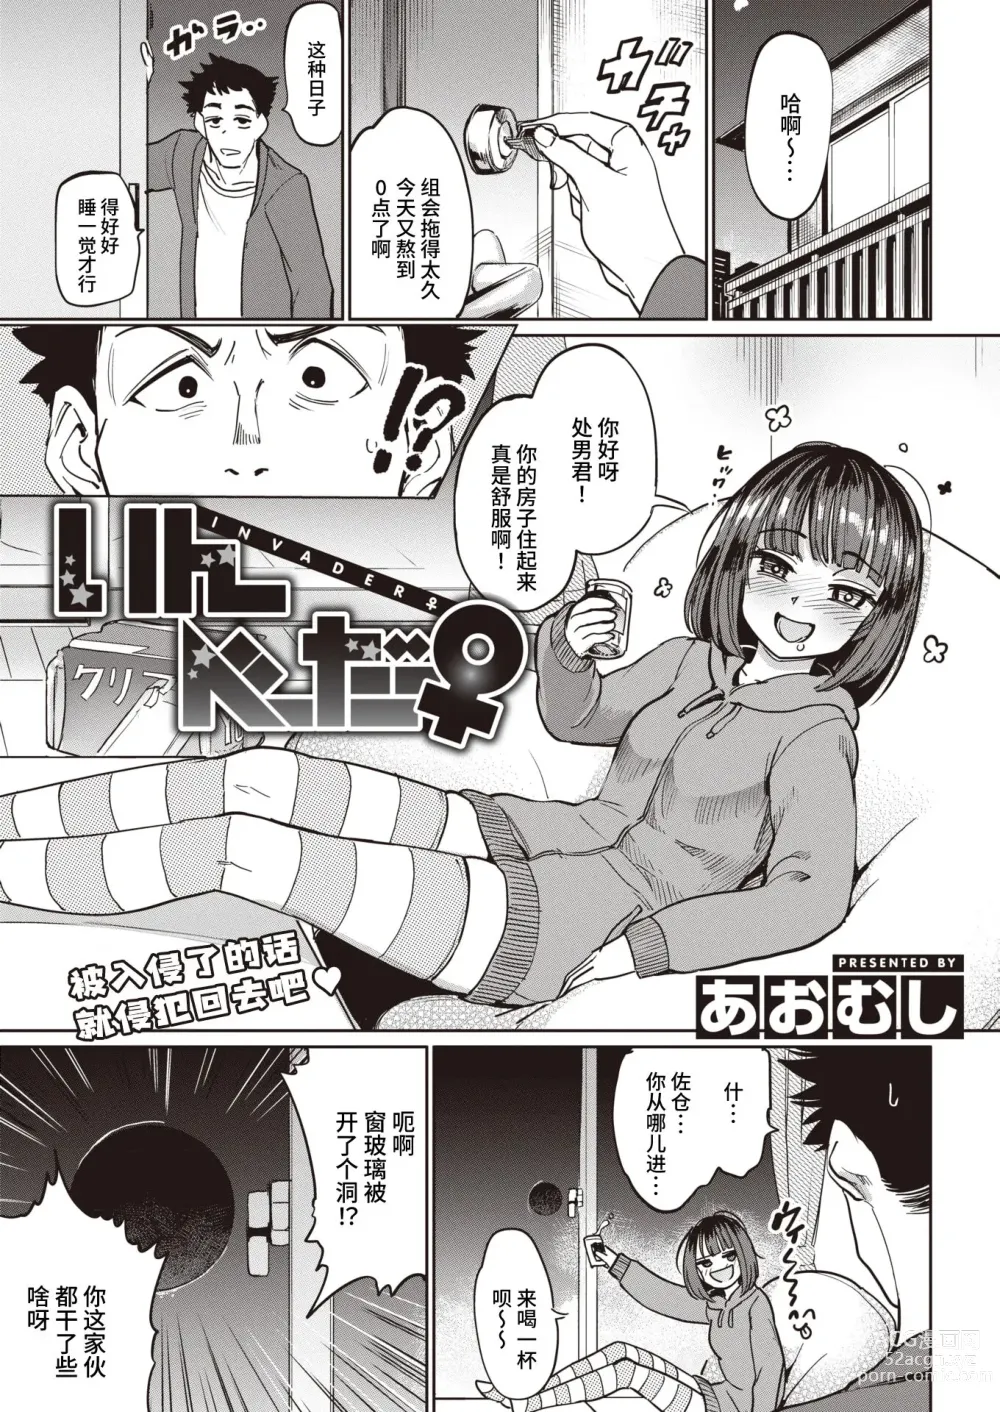 Page 2 of manga INVADER ♀